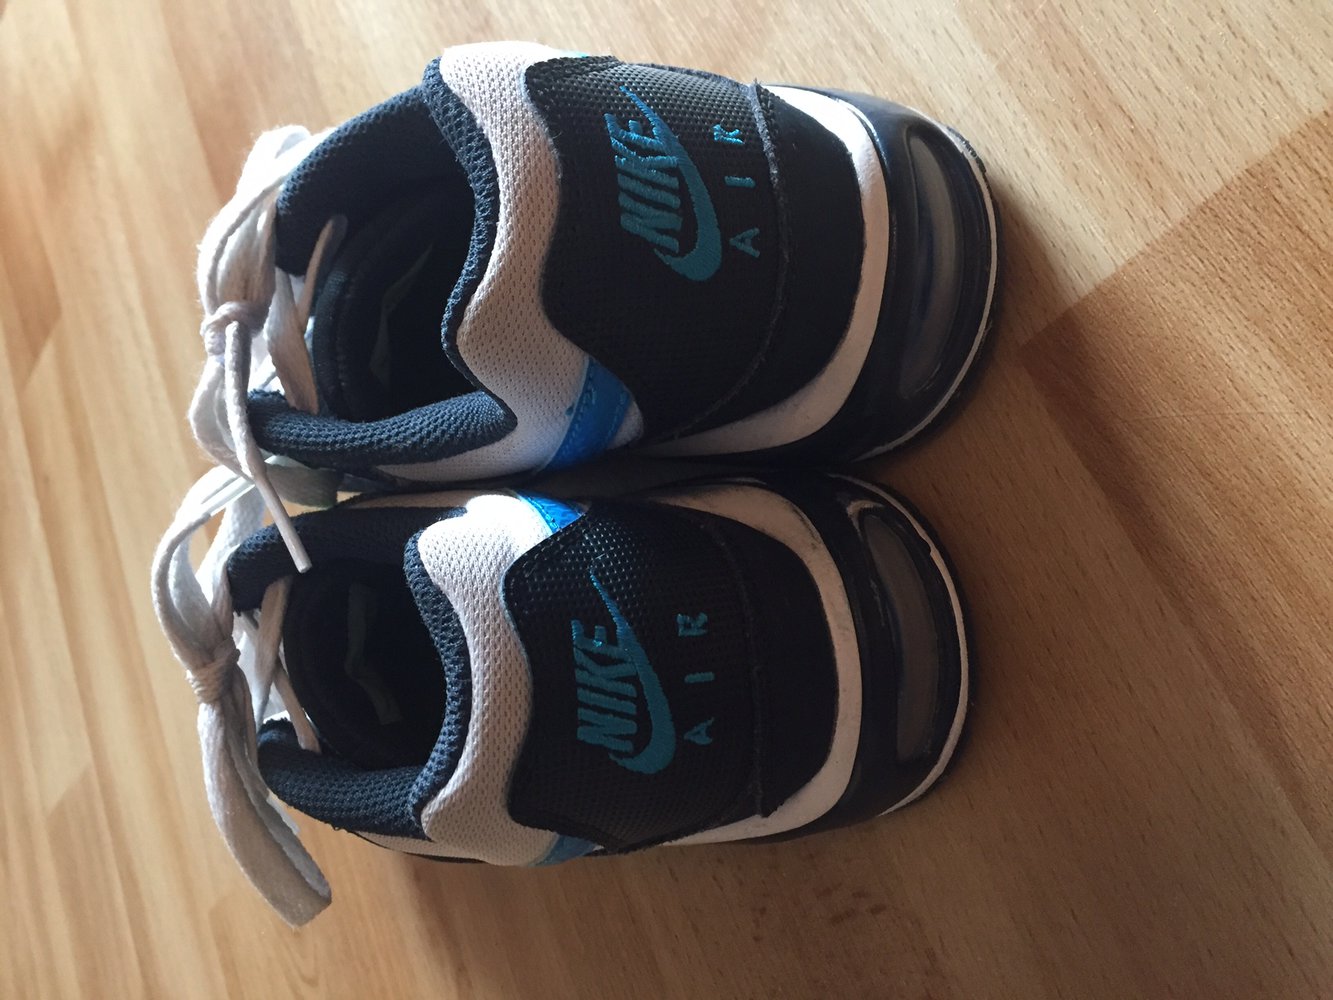 neuwertige Nike Air Max, weiß-blau, Gr. 36,5